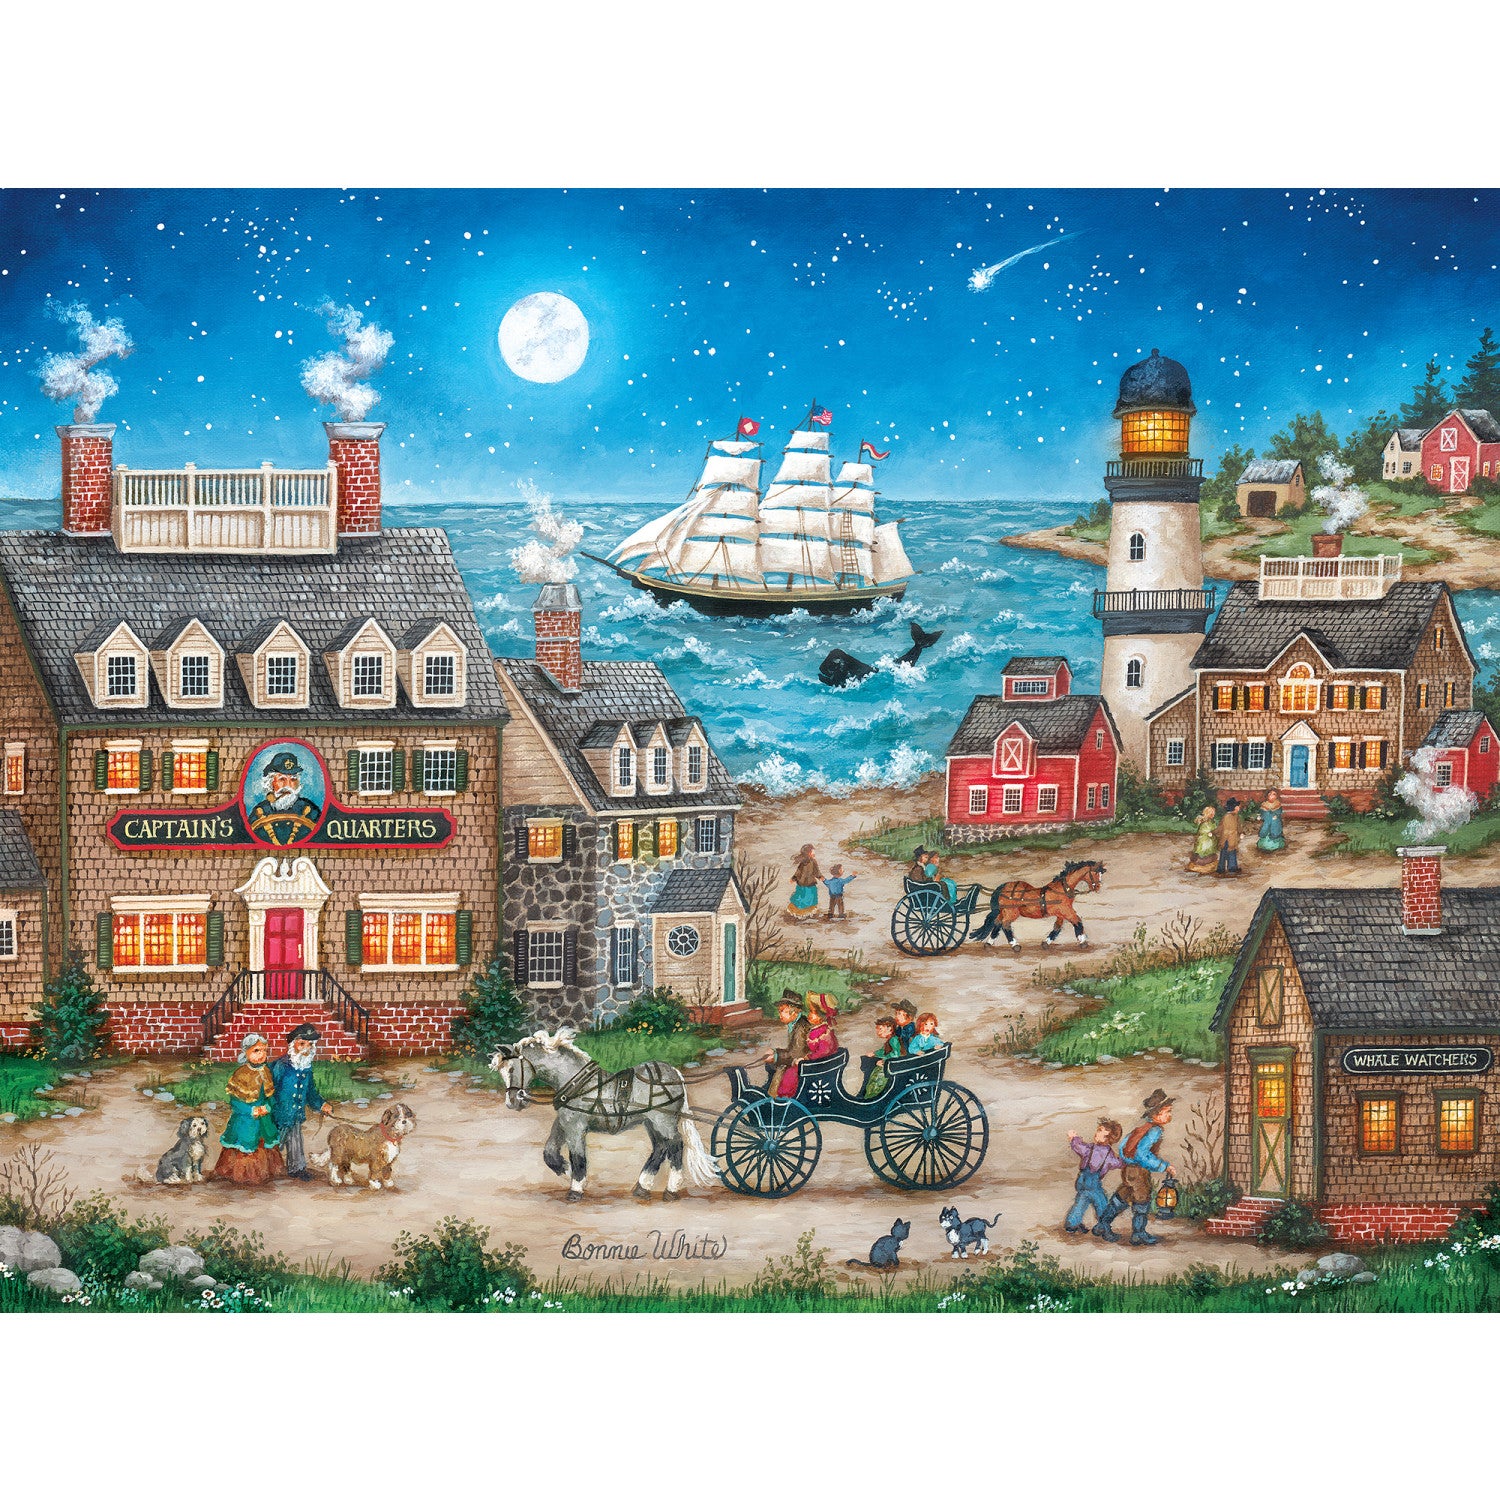 Heartland - Starry Starry Night 550 Piece Puzzle